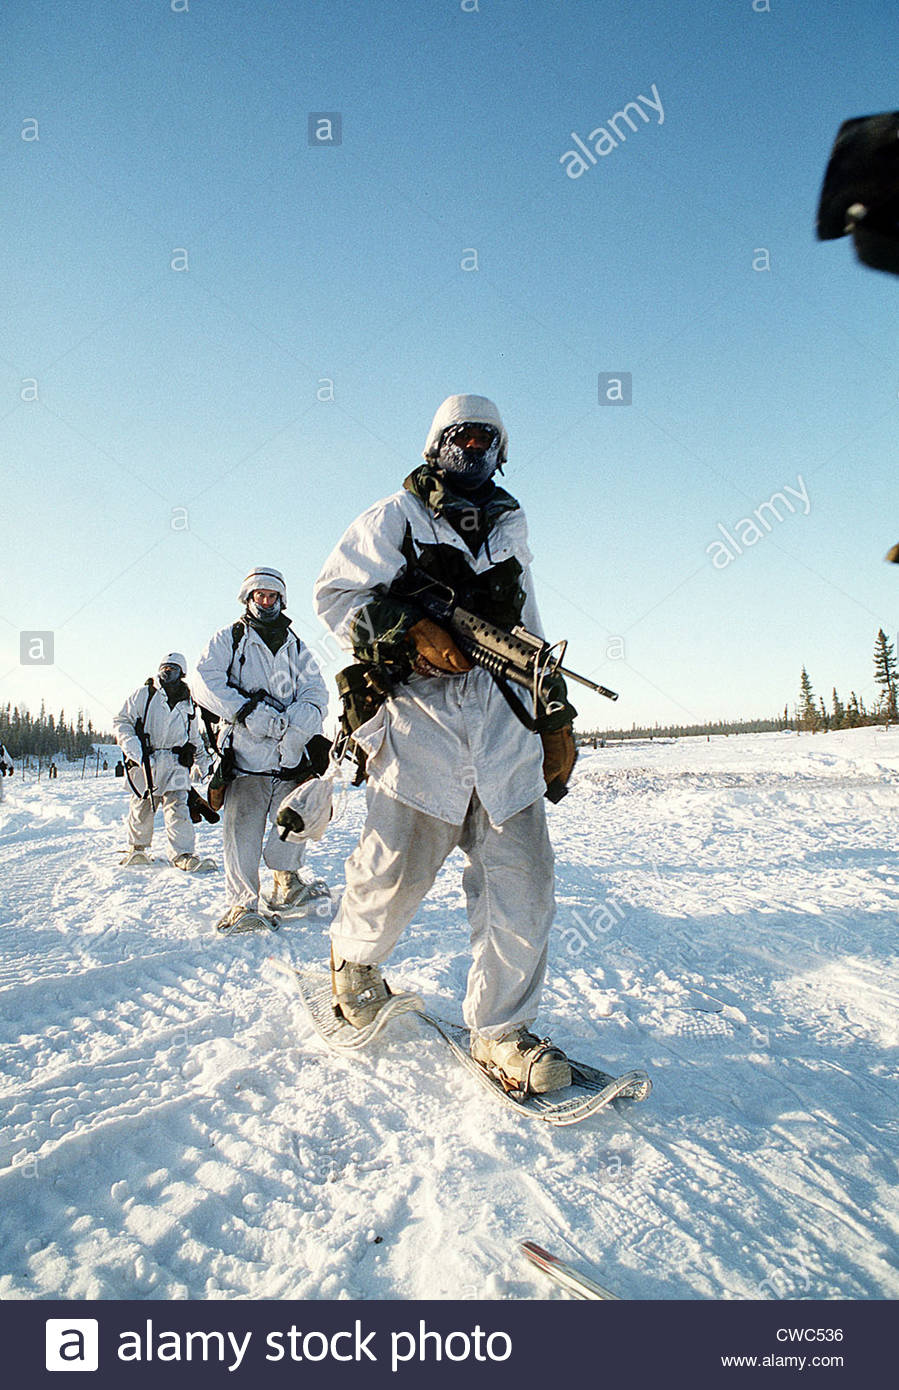 us-soldiers-in-arctic-warfare-training-at-fort-greely-alaska-jan-31-CWC536.jpg